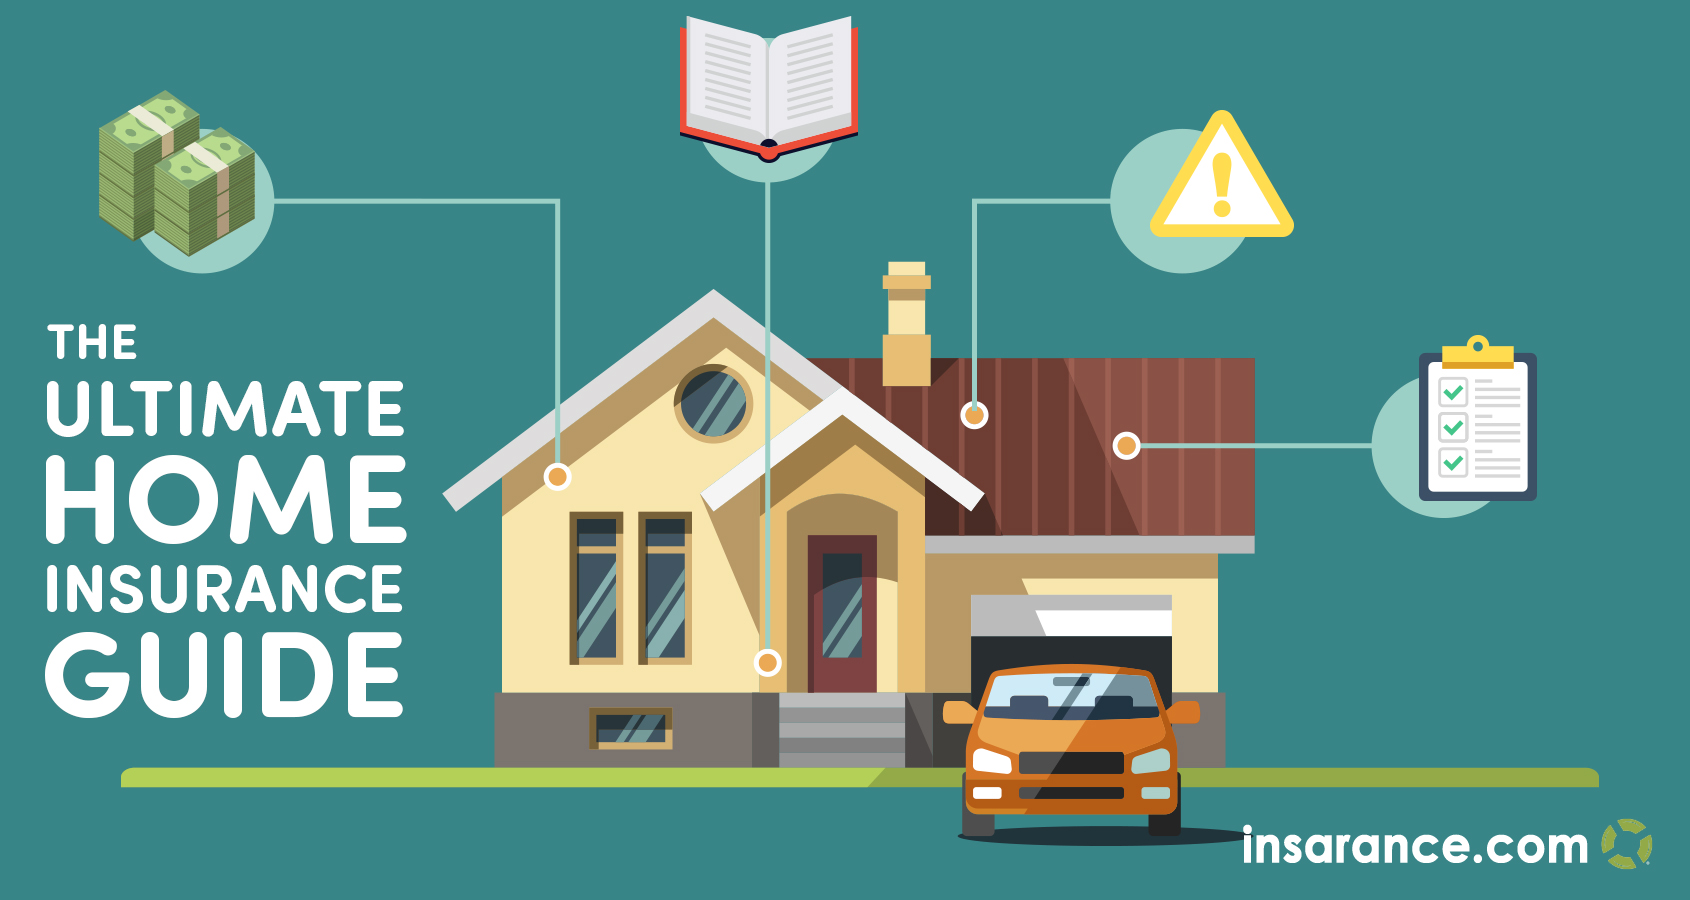 insarance-the-ultimate-home-insurance-guide-insurancehub copy.jpg